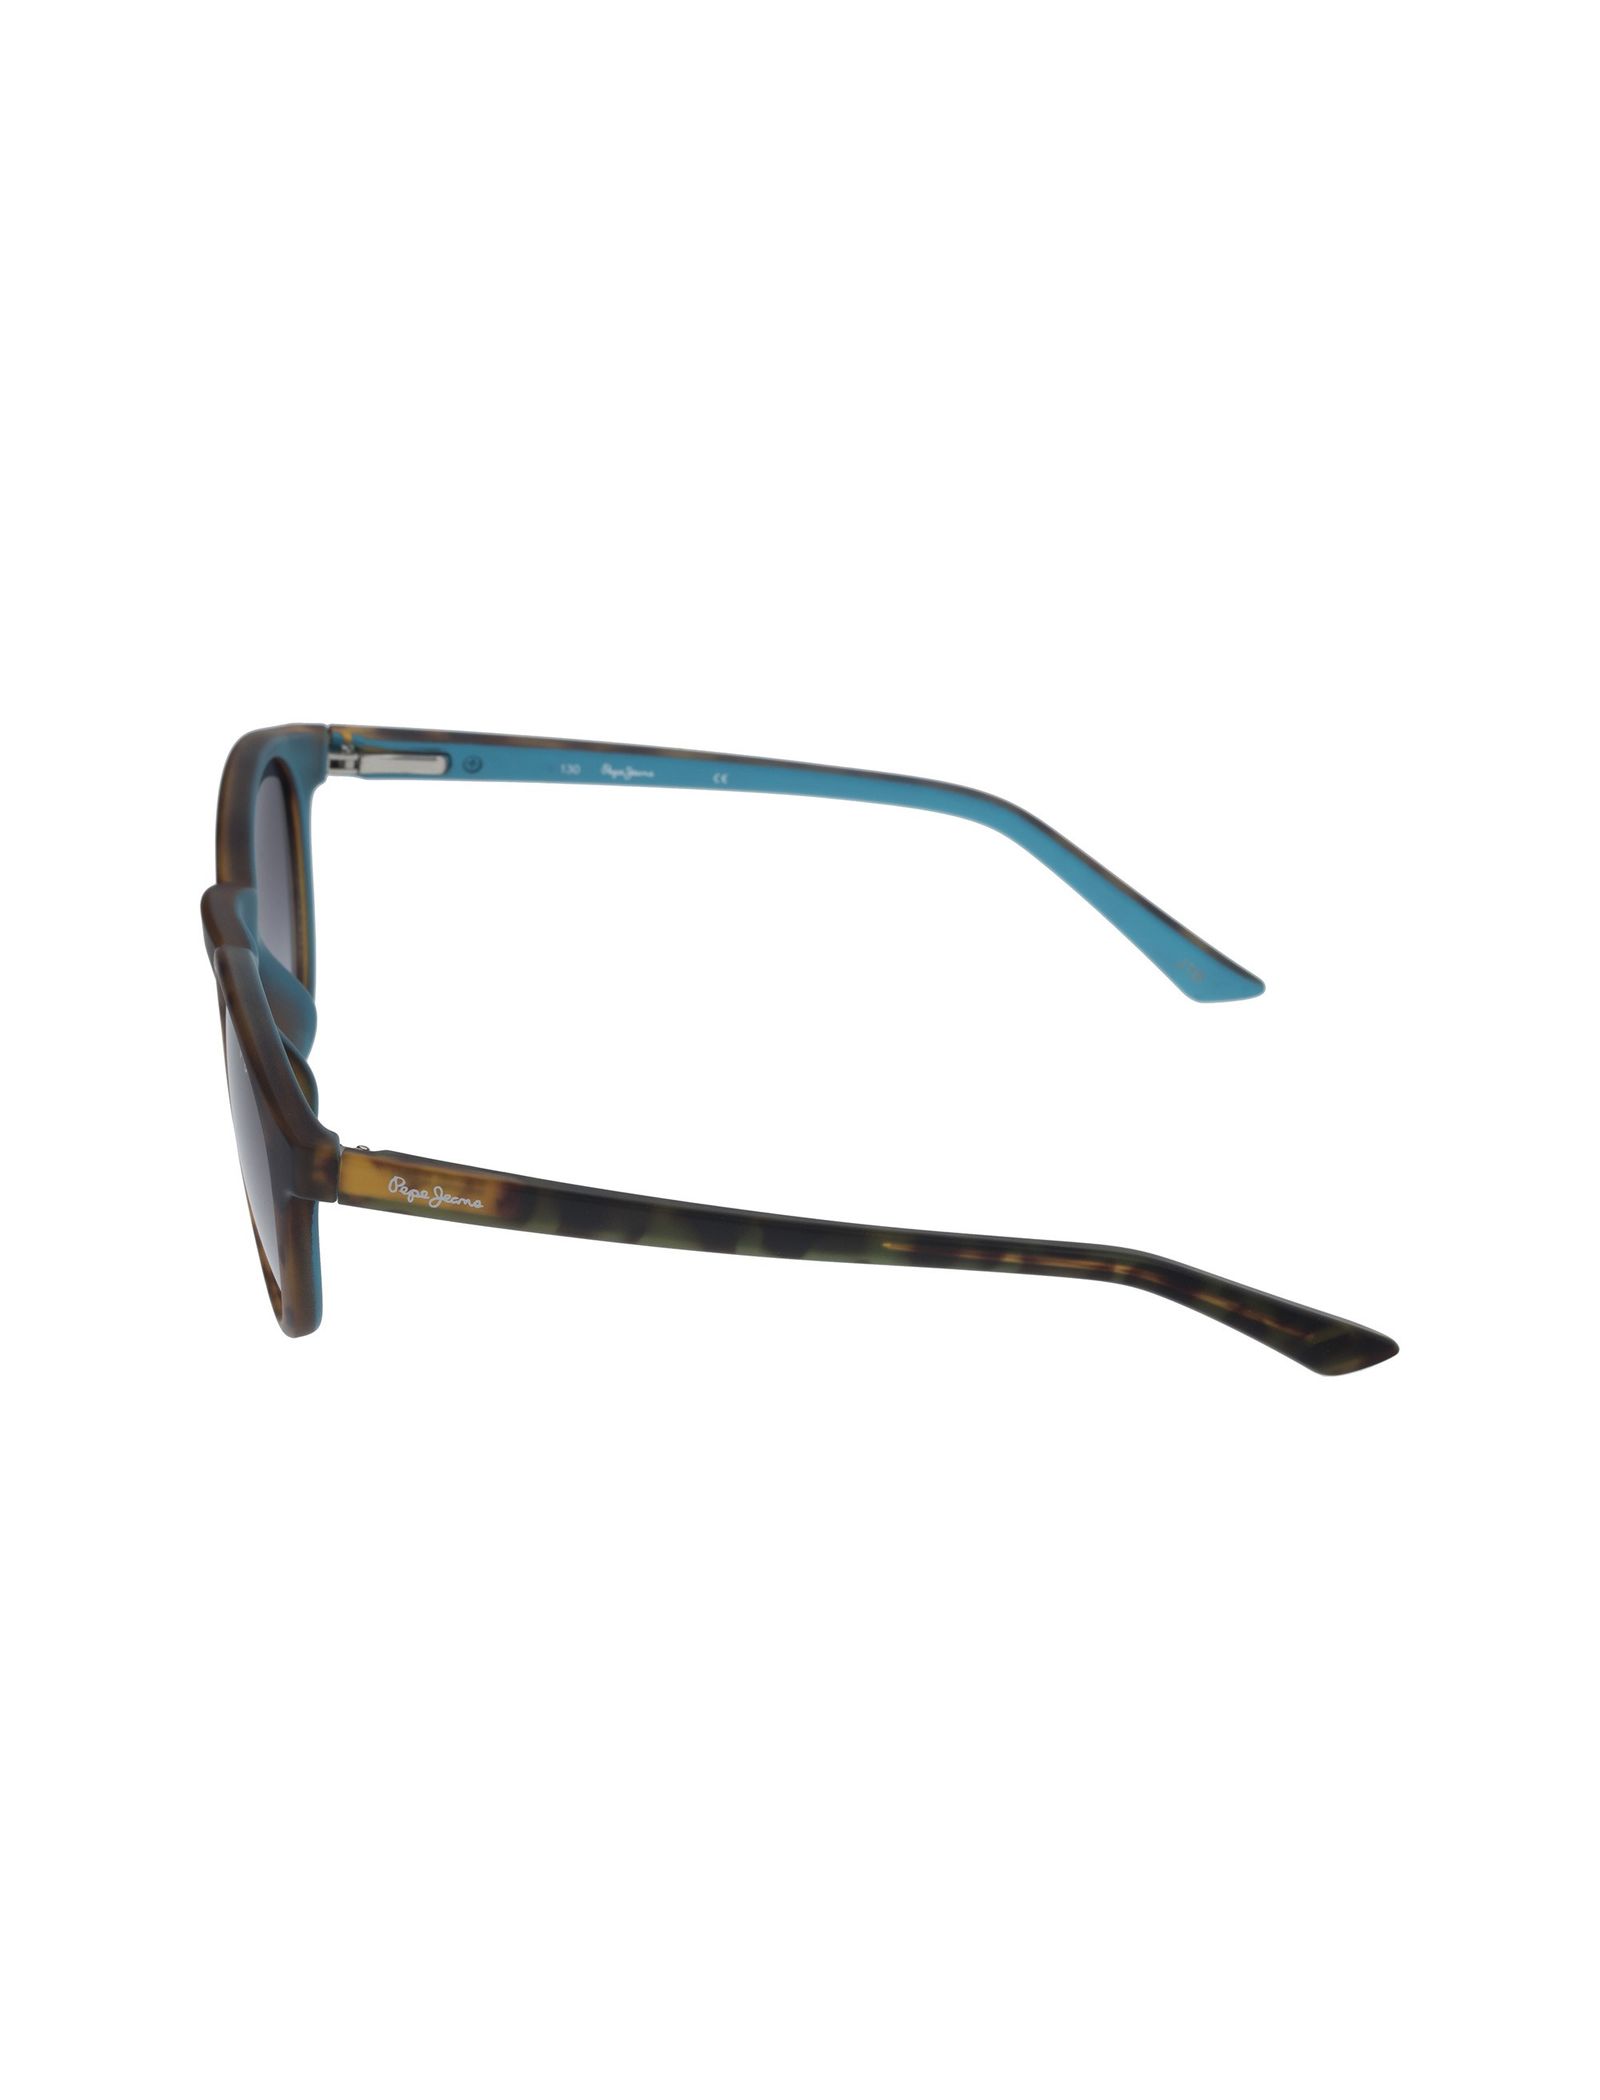 عینک آفتابی پنتوس بچگانه - پپه جینز - قهوه اي - 4